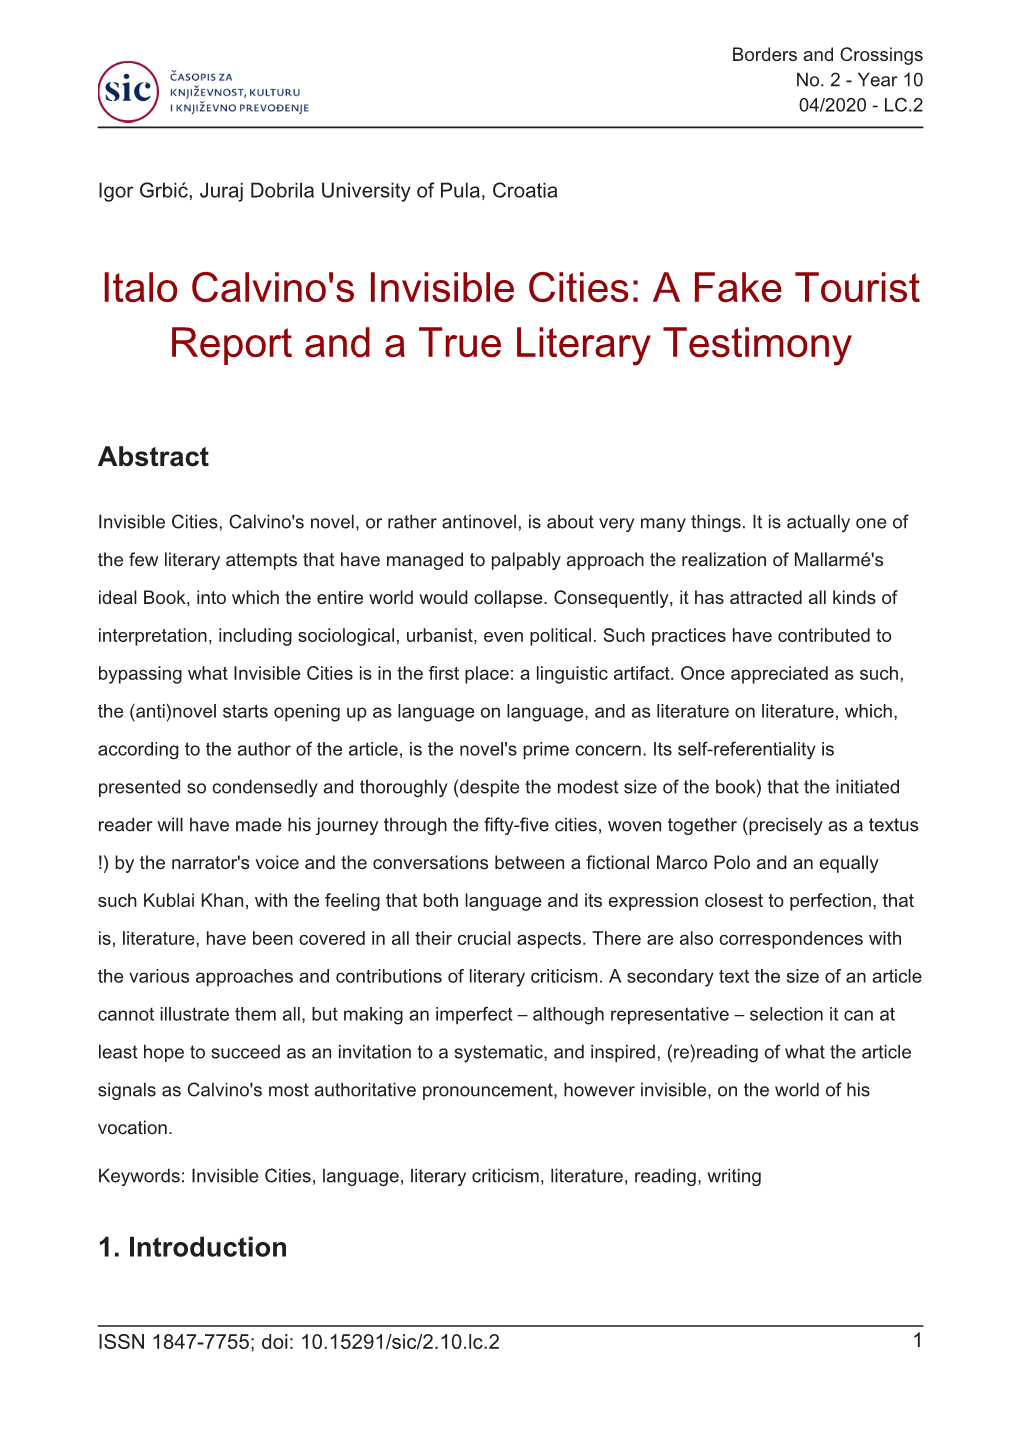 Italo Calvino's Invisible Cities: a Fake Tourist Report and a True Literary Testimony